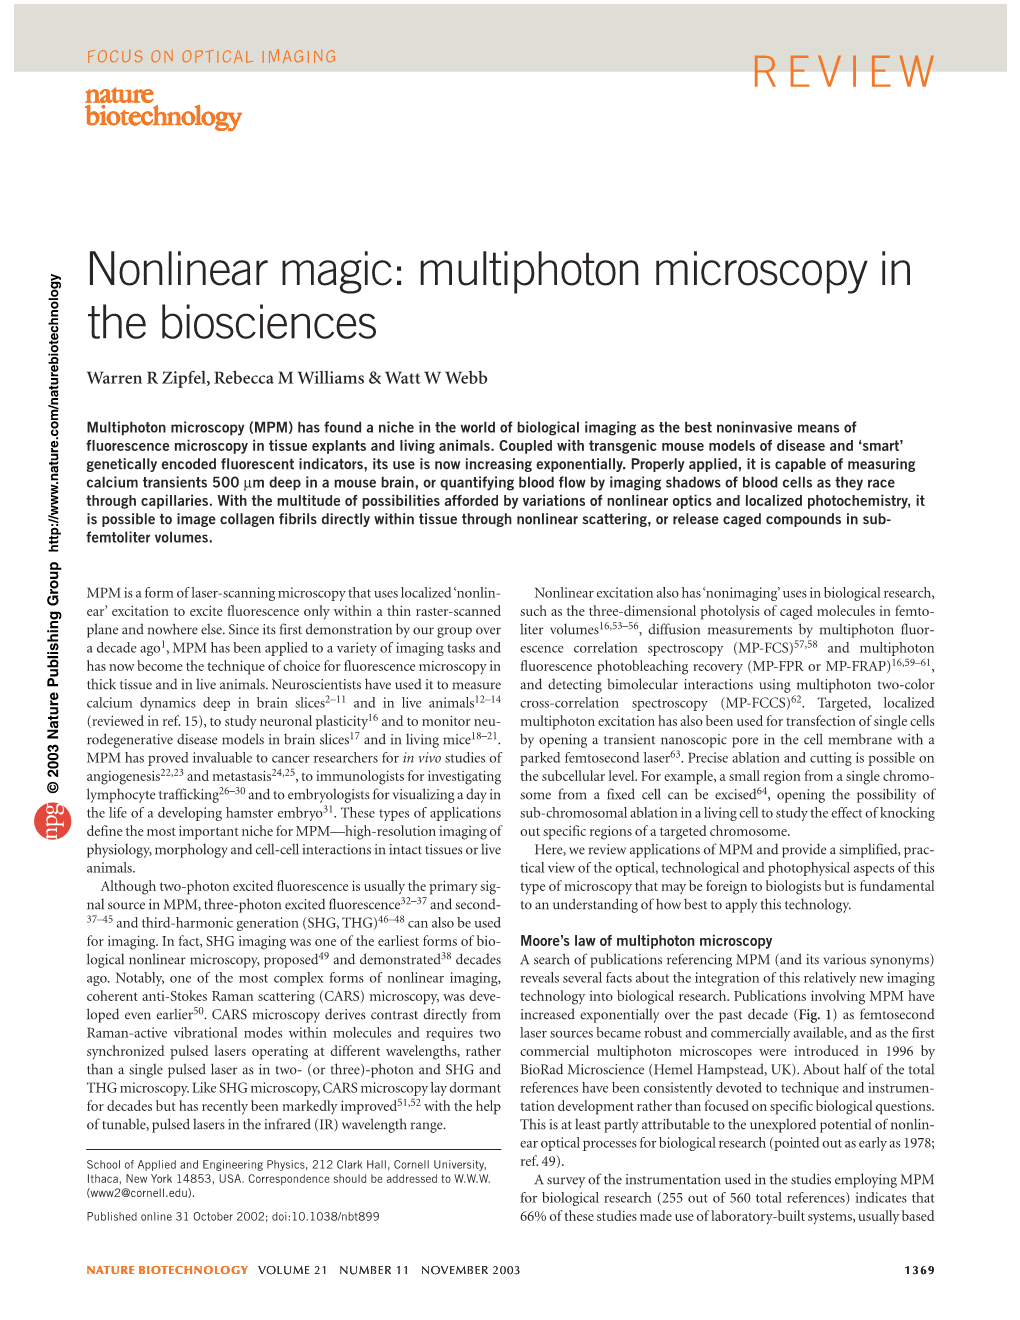 Nonlinear Magic: Multiphoton Microscopy in the Biosciences